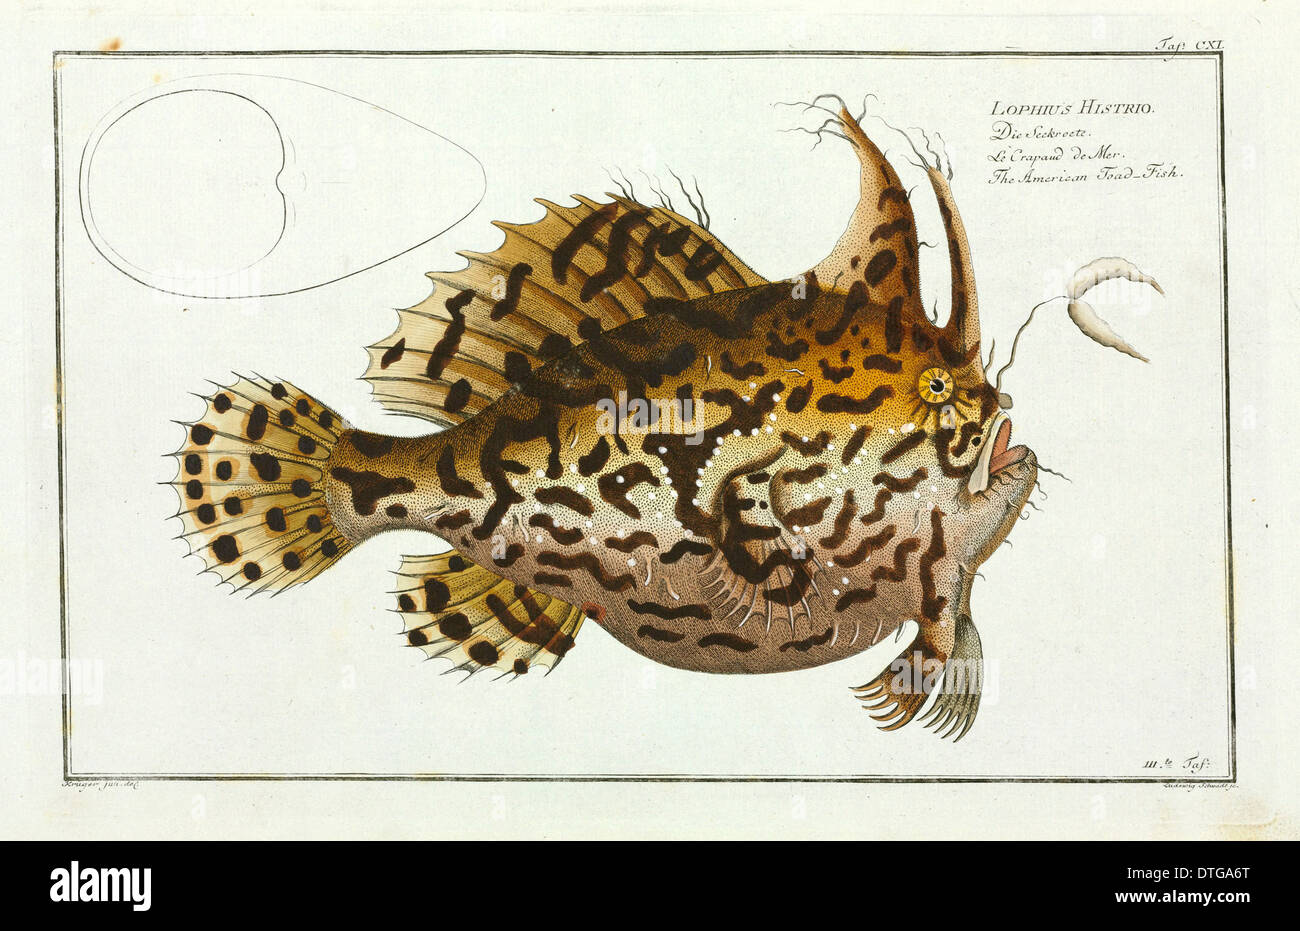 Lophius histrio or The American toad-fish [Histrio histrio] Stock Photo